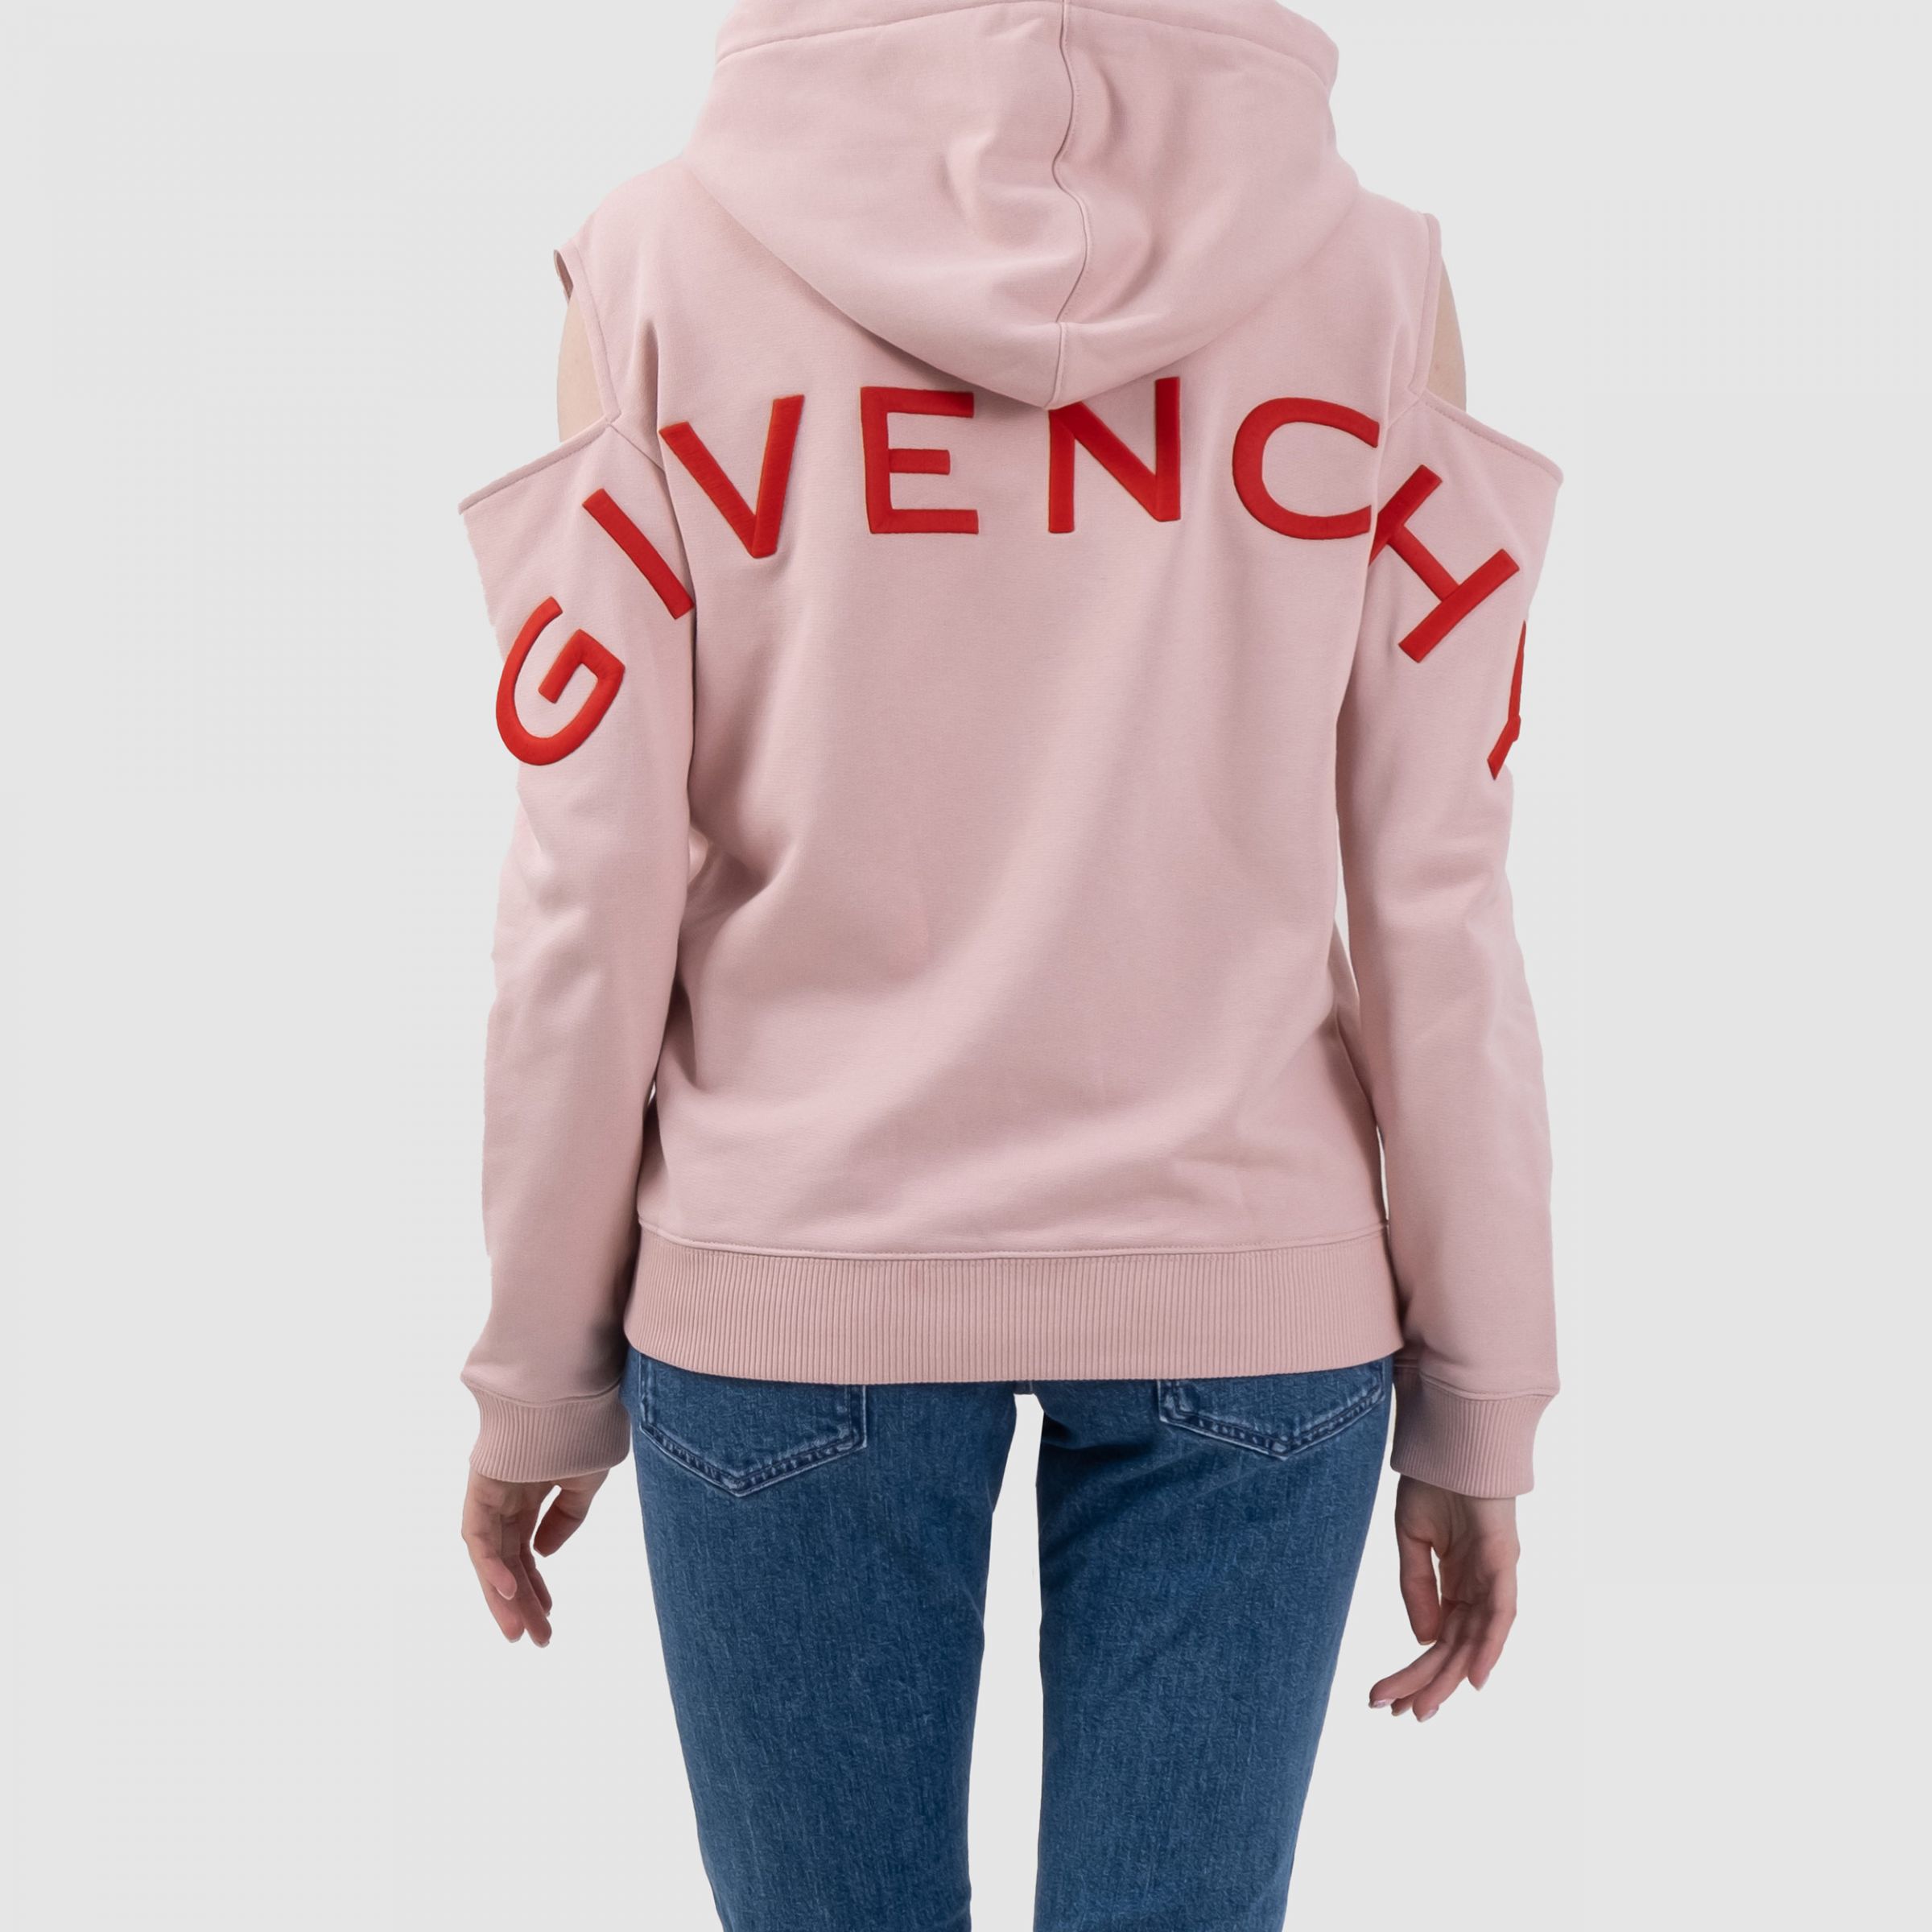 Худи Givenchy розовое